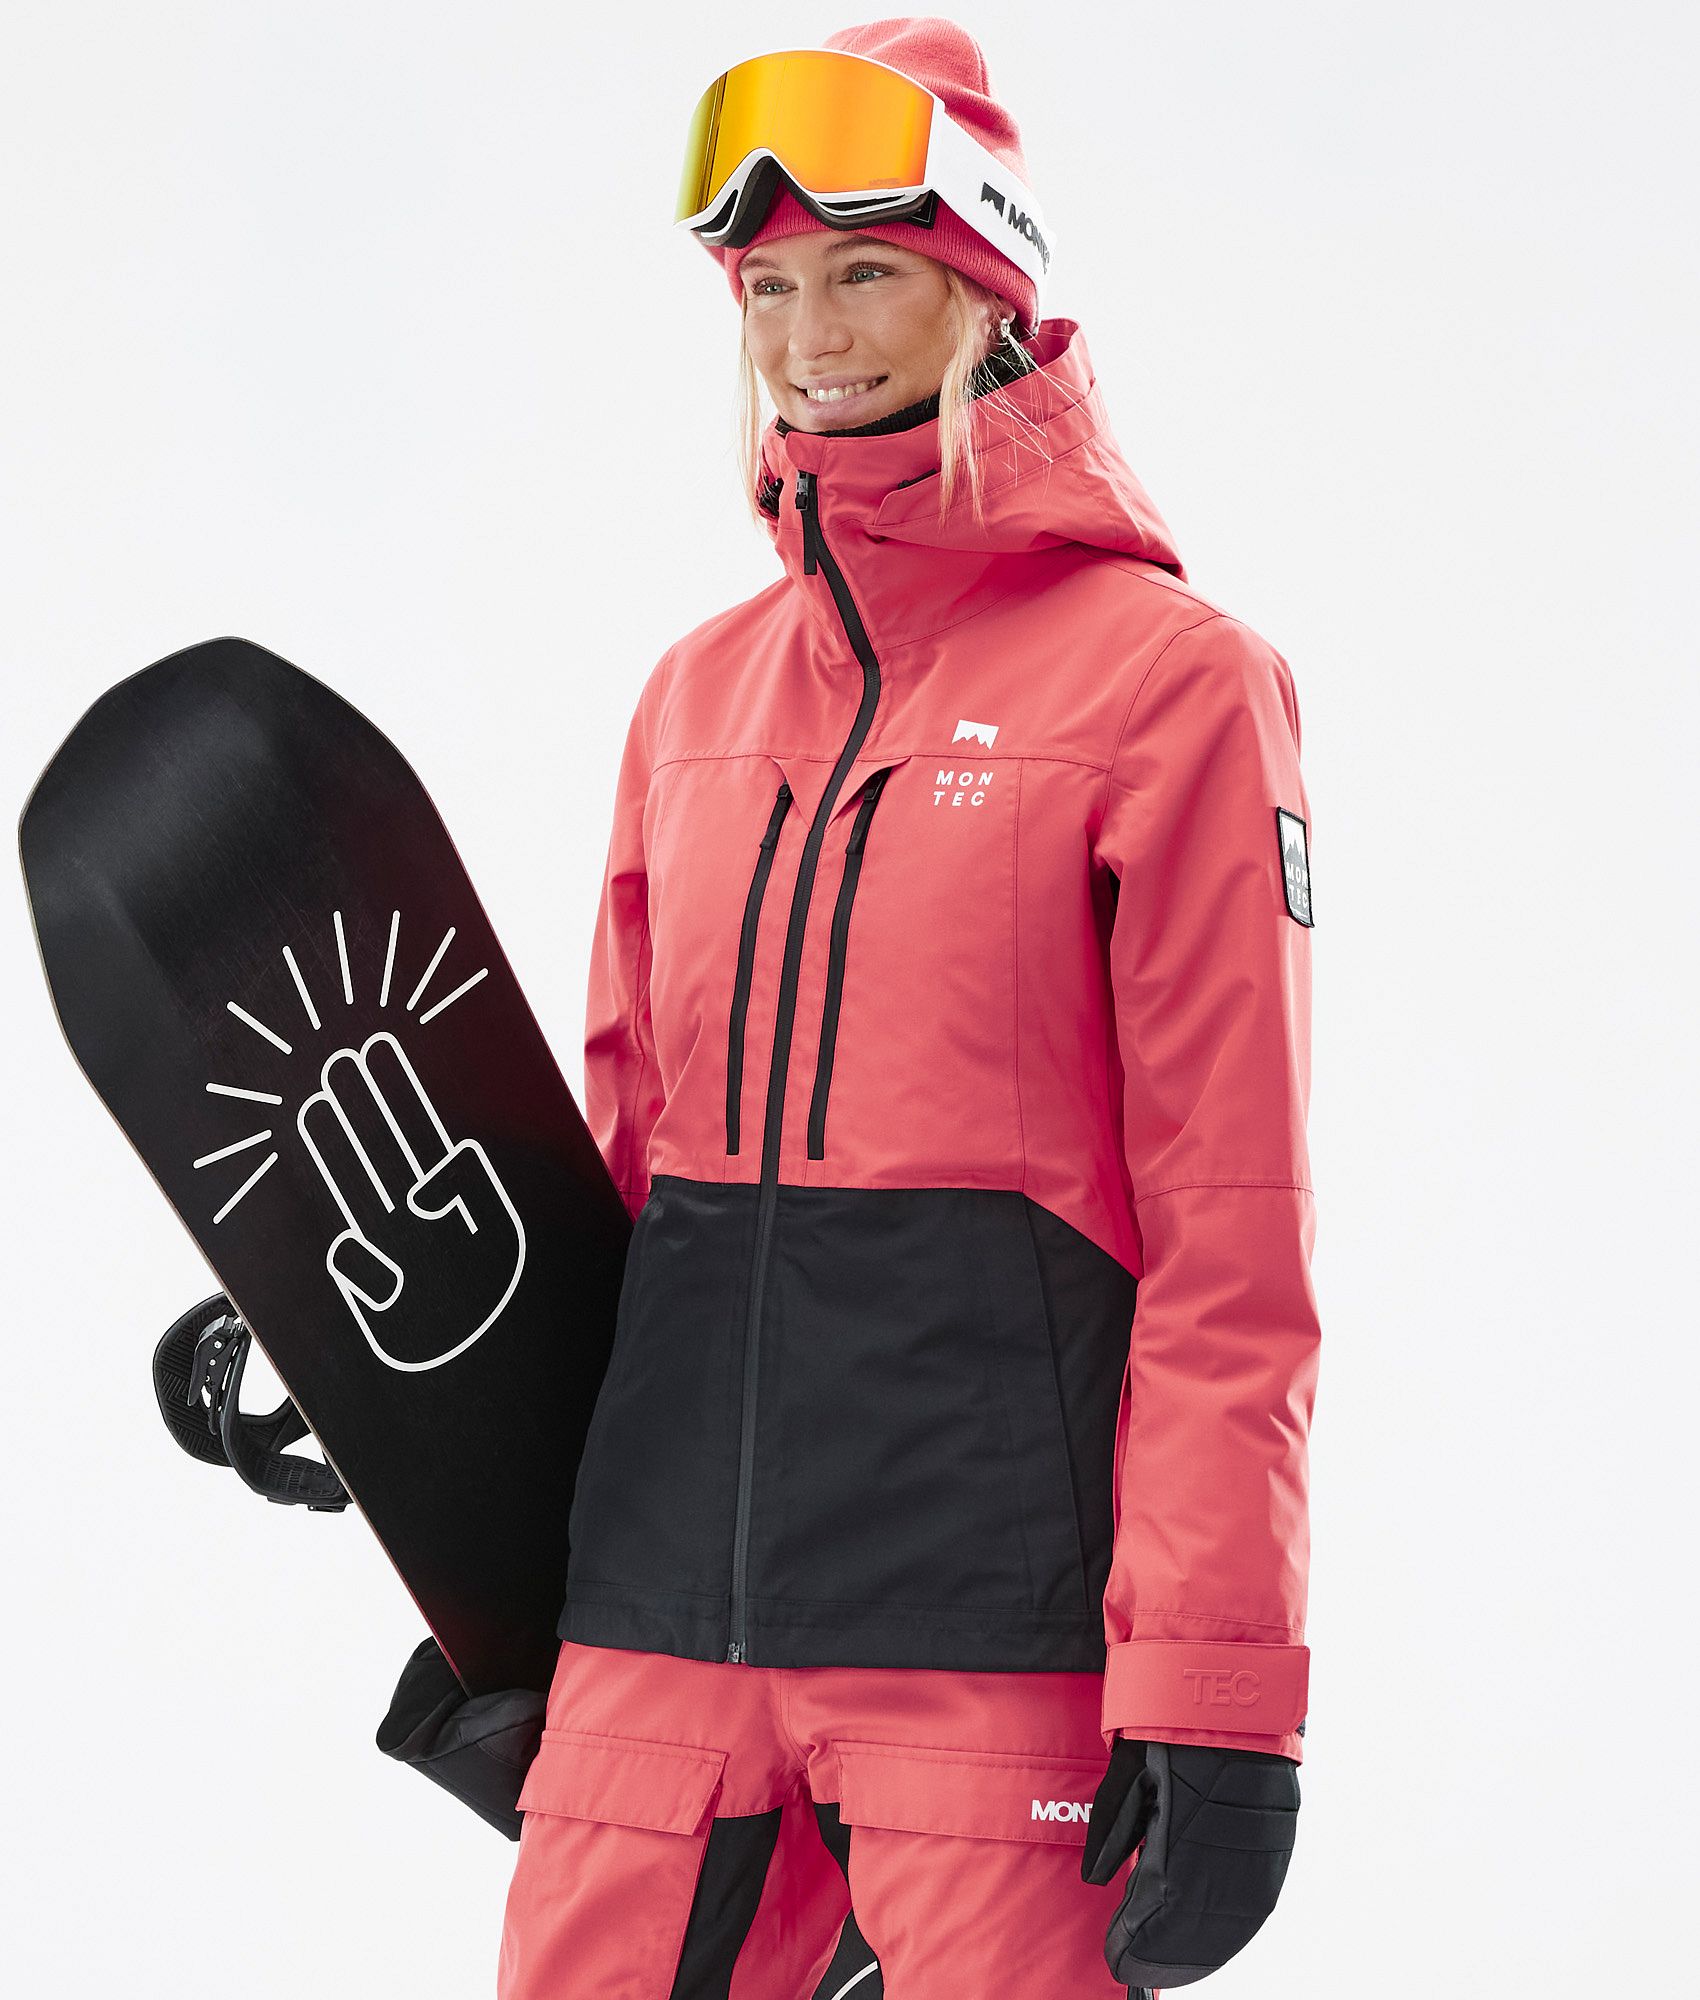 Achat RickyR veste de snowboard filles enfants pas cher  ochsnersportch